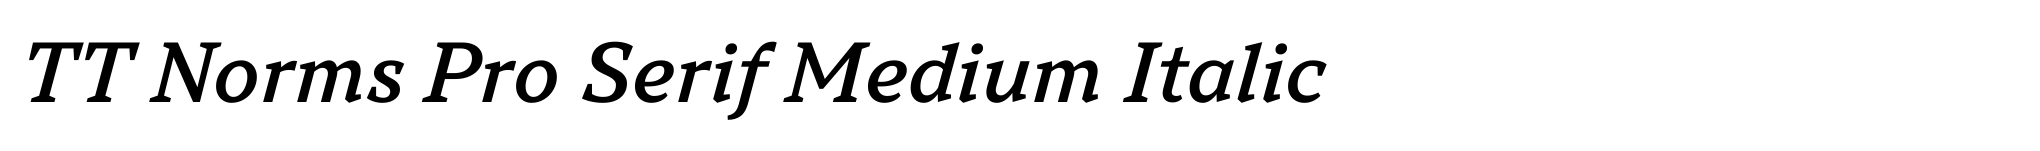 TT Norms Pro Serif Medium Italic image